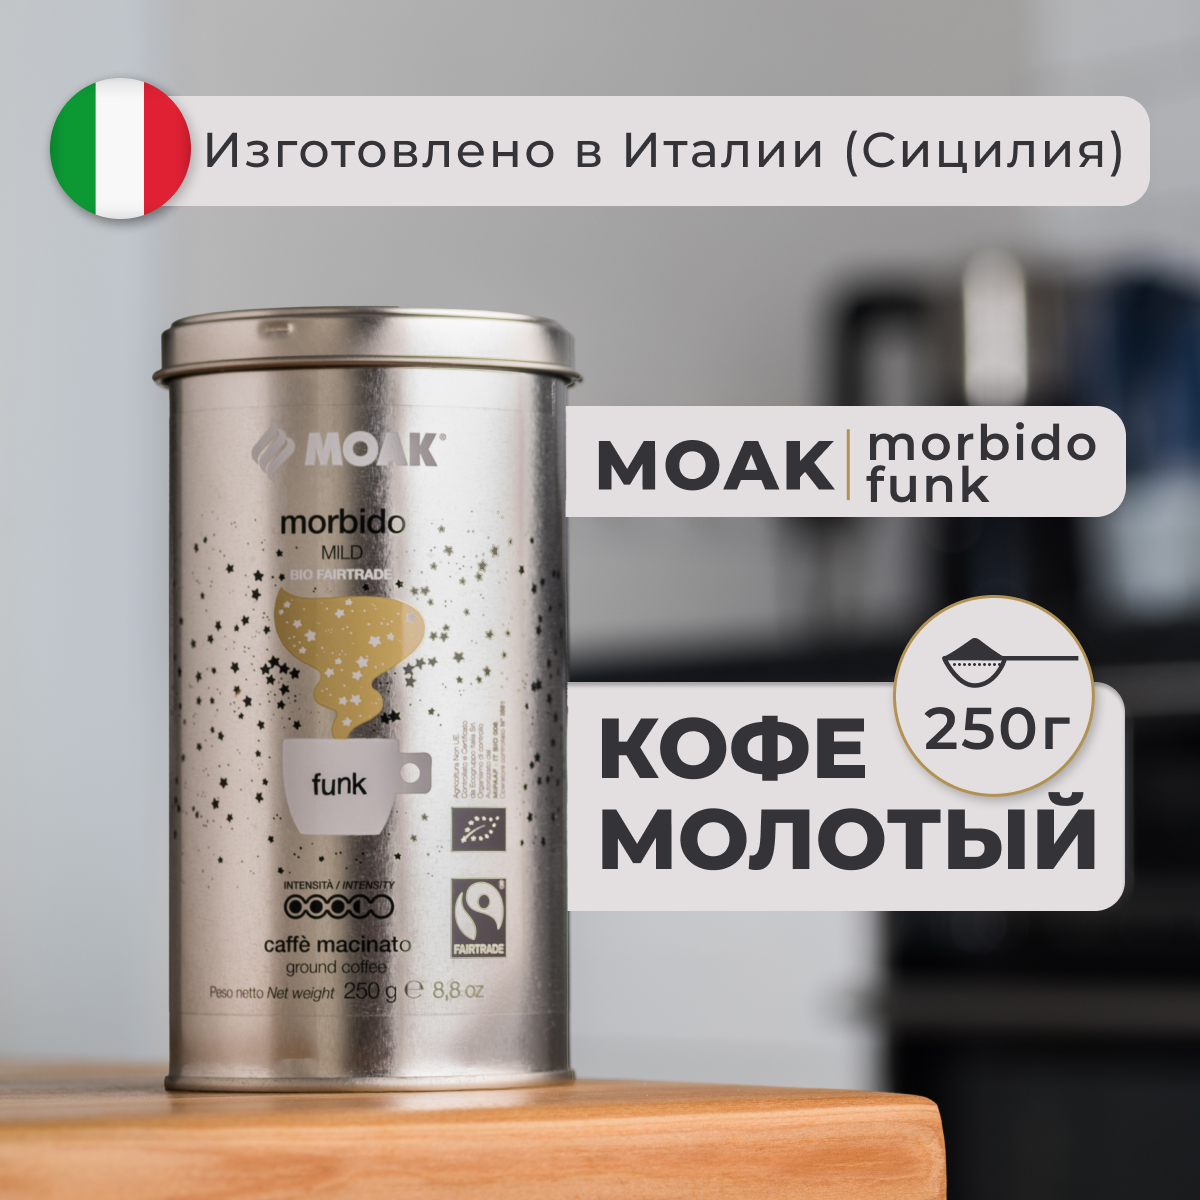 Кофе молотый Moak Morbido Funk 250 гр. (ж. б.)